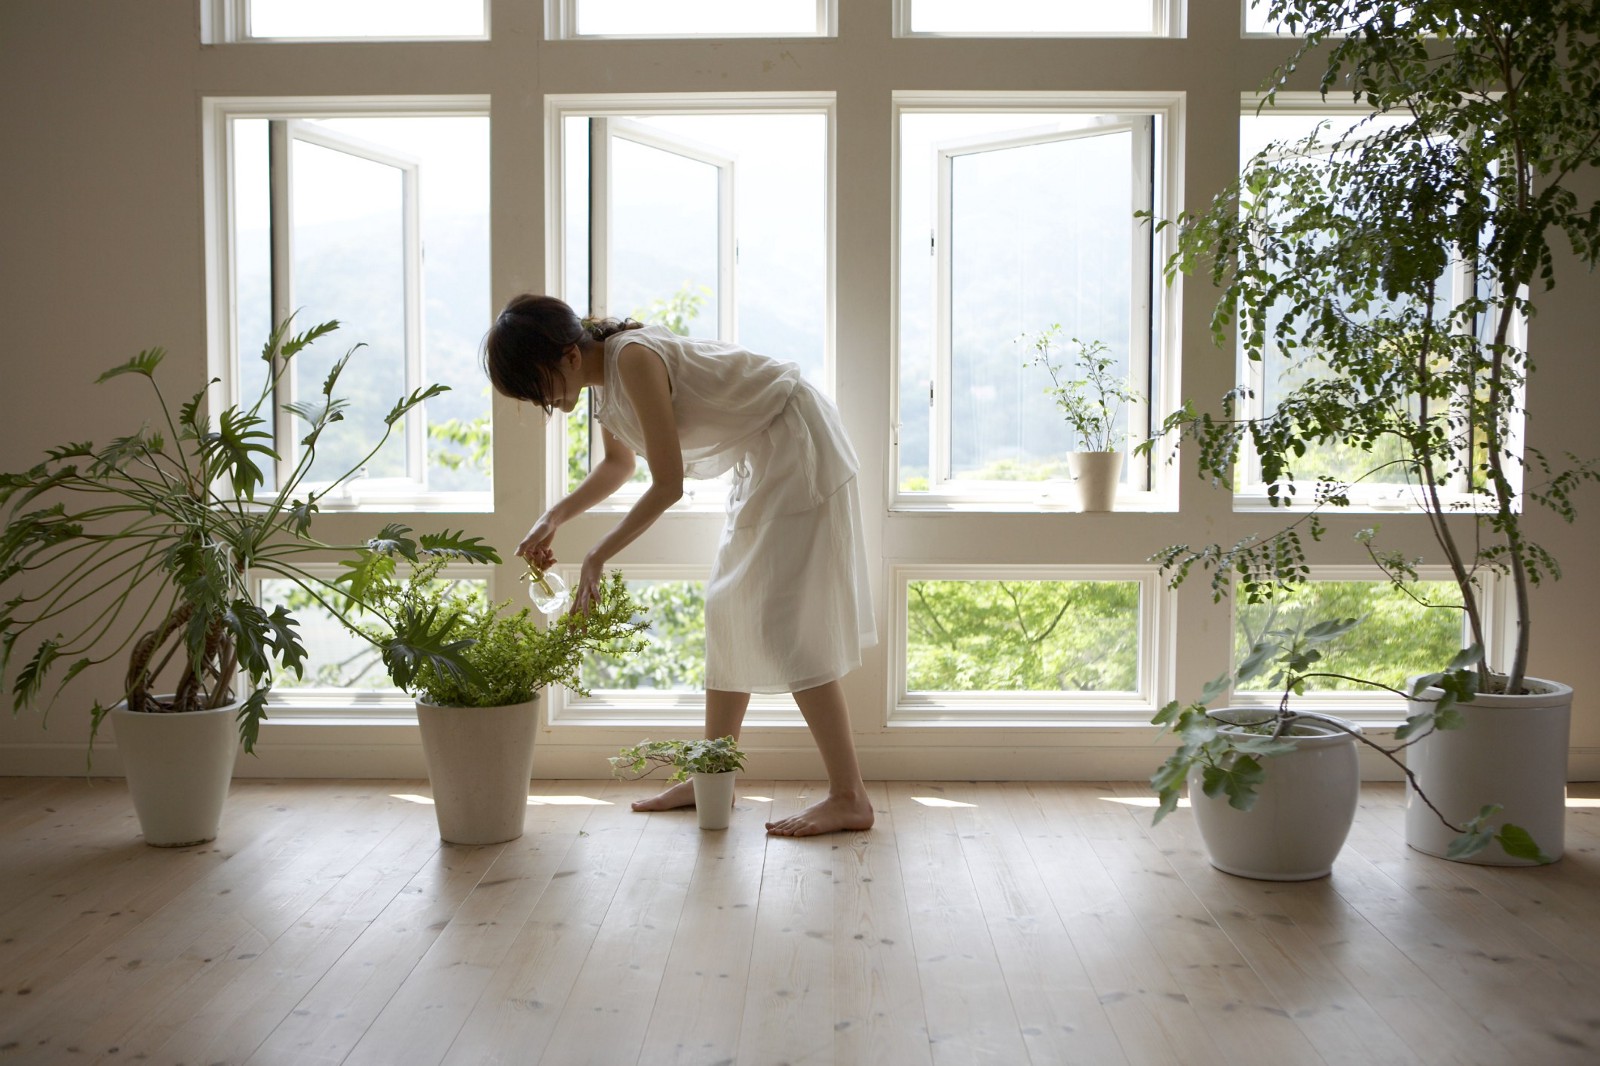 [Растения в доме] Какие растения стоит взять с дачи в квартиру на зиму?